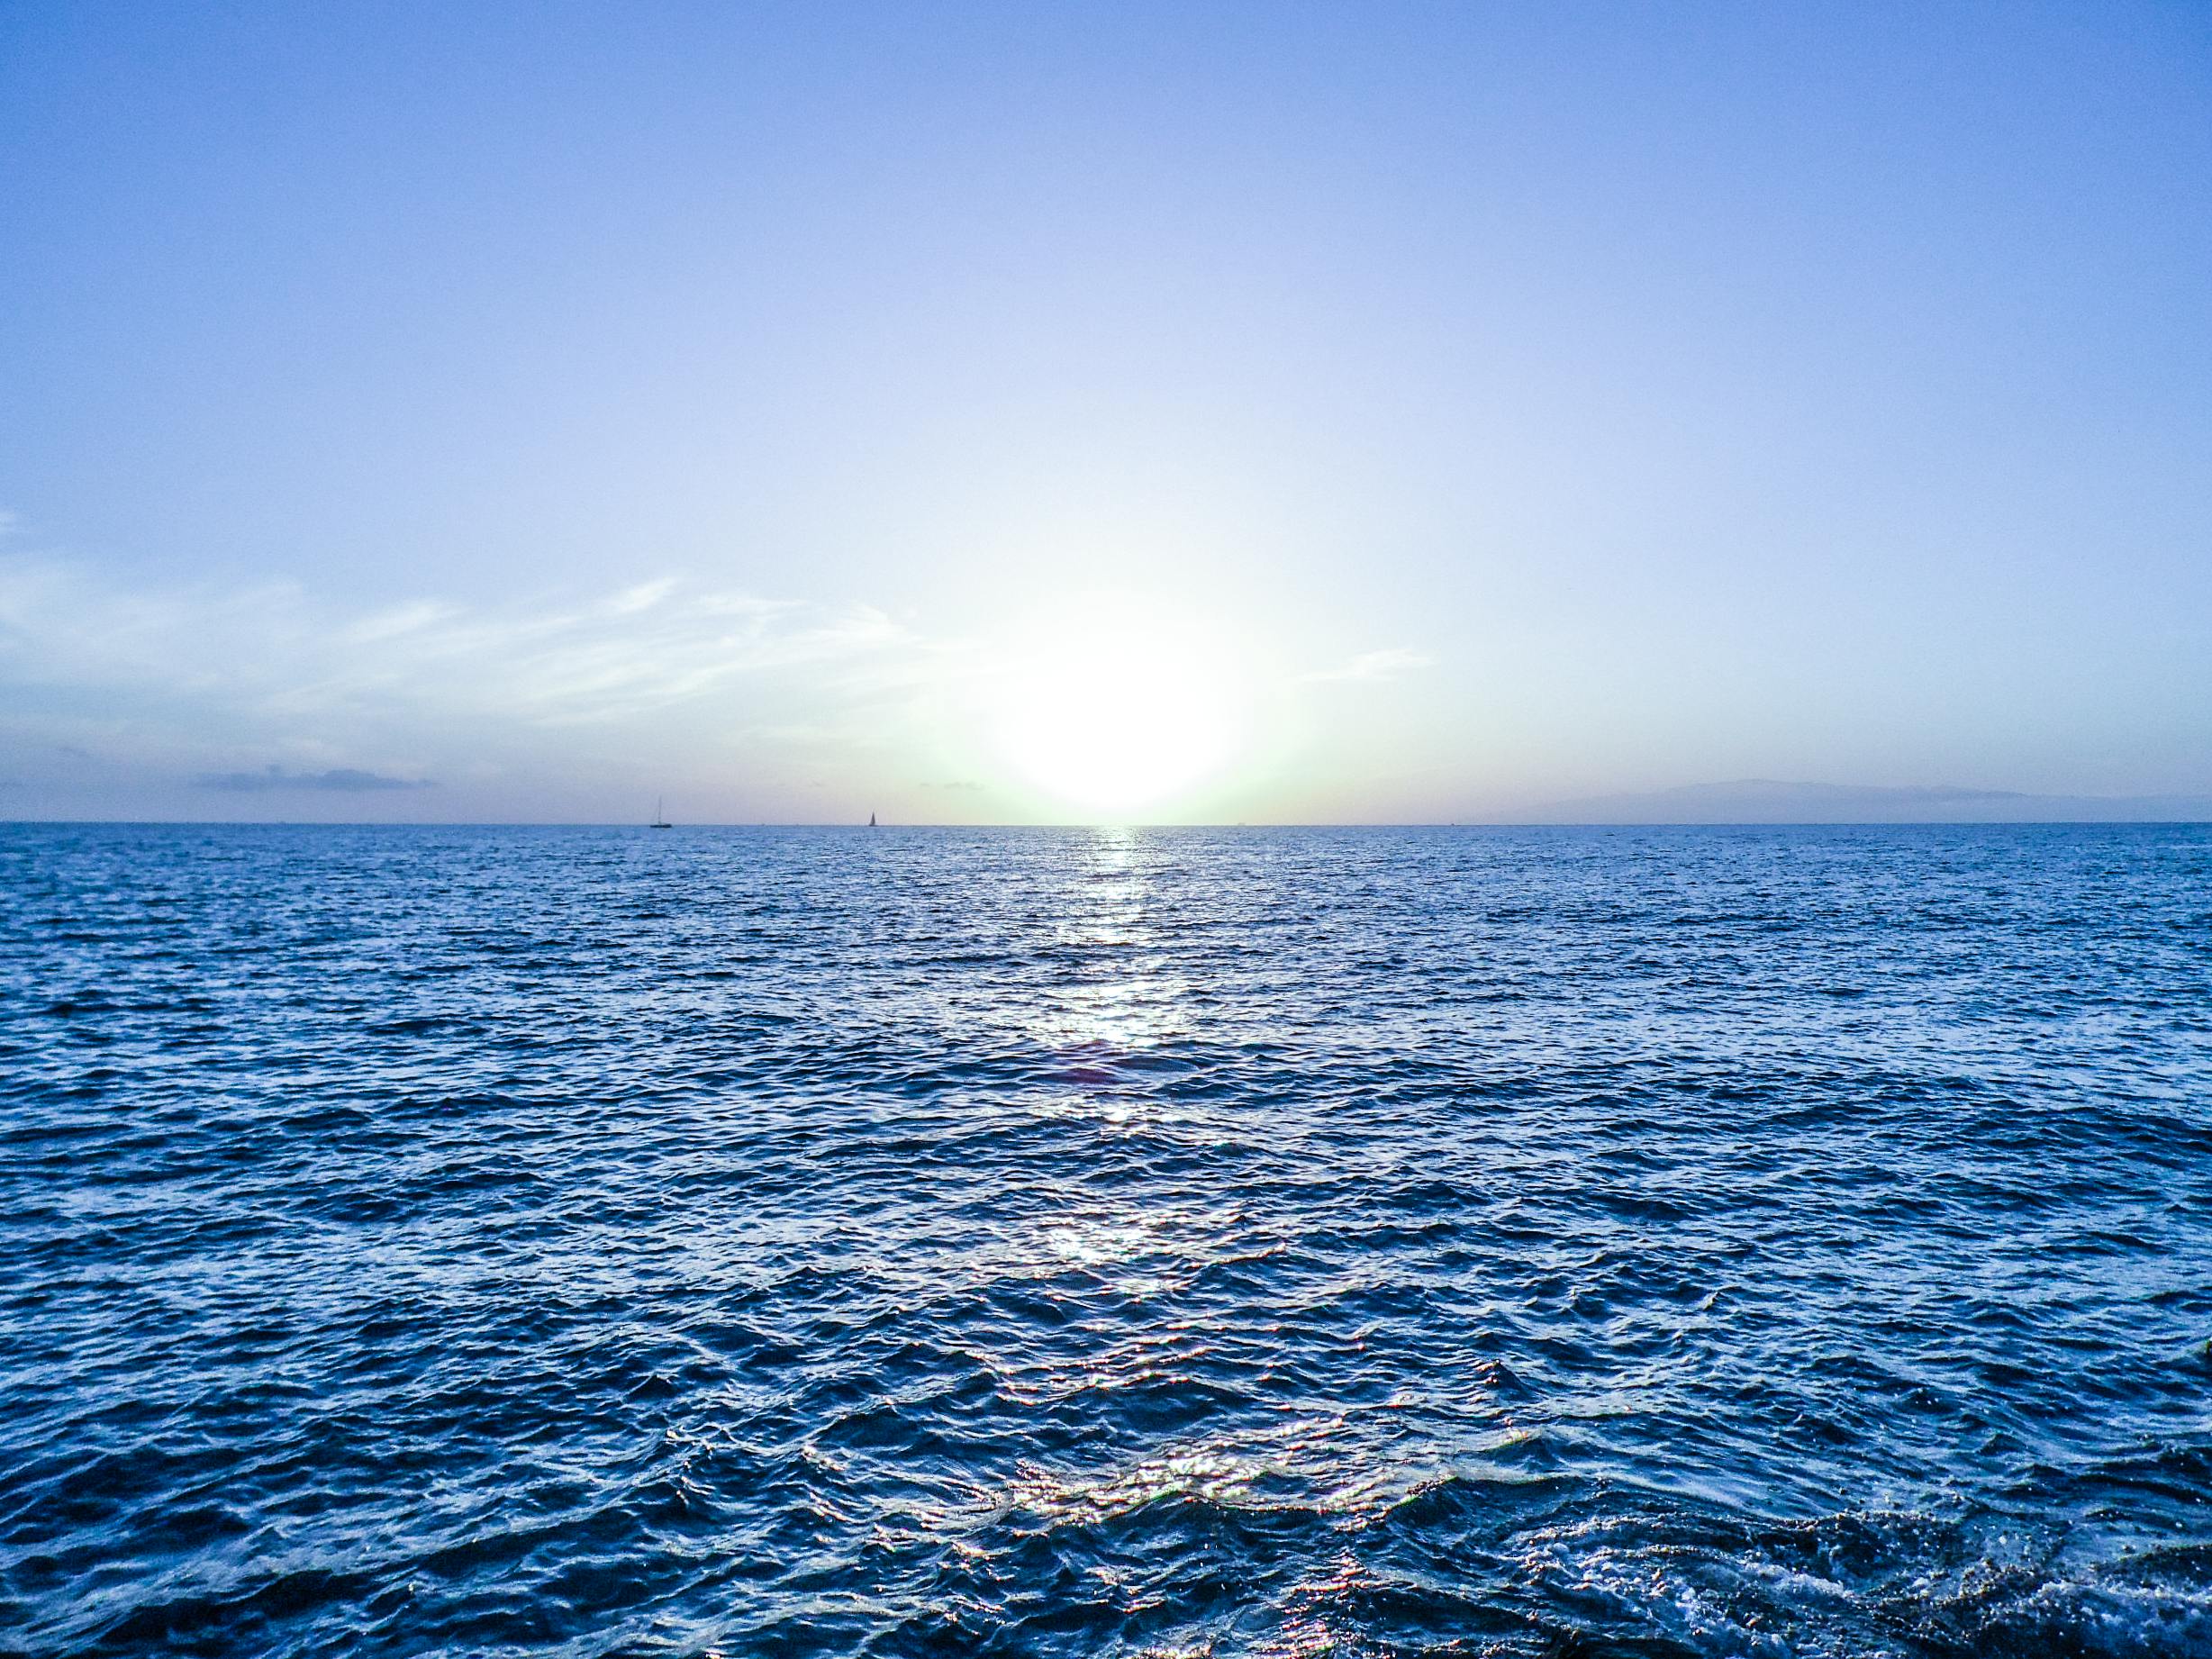 1000 Scenic Sea Pictures · Pexels · Free Stock Photos